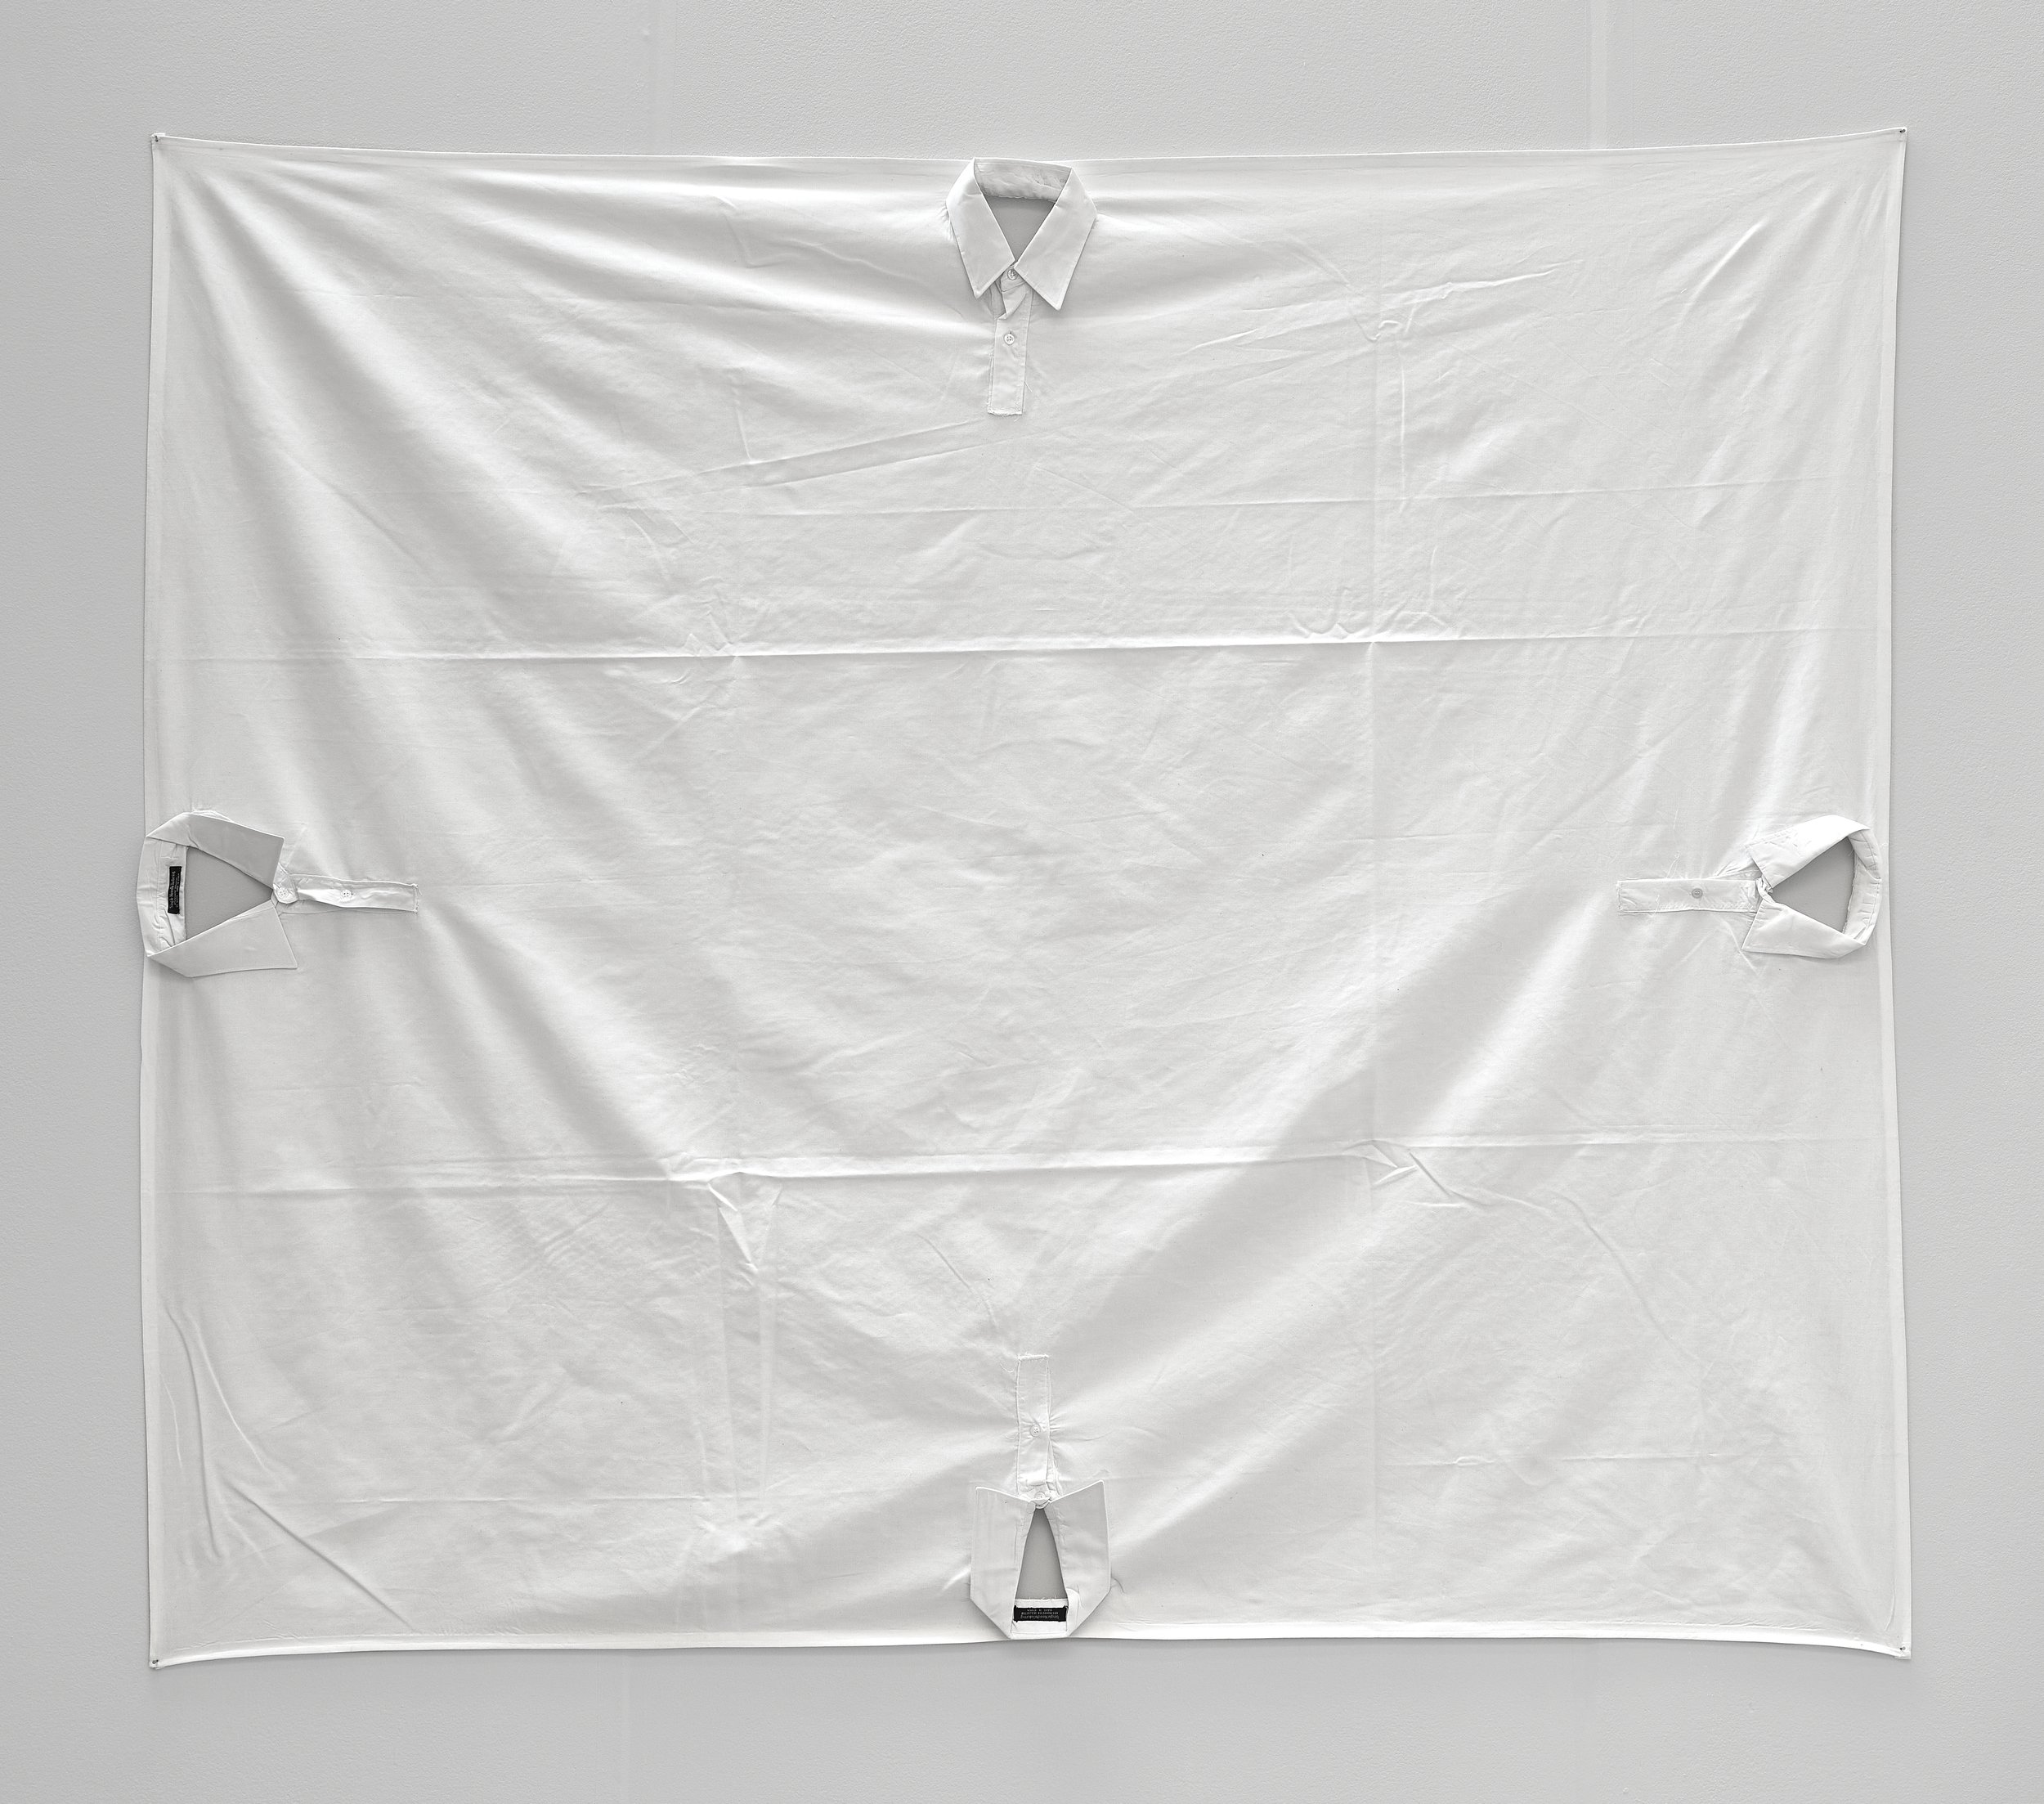   Allan Wexler,   4 Collars Sewn into a Tablecloth , 1991. White shirts, tablecloth, 82 x 82 inches. 